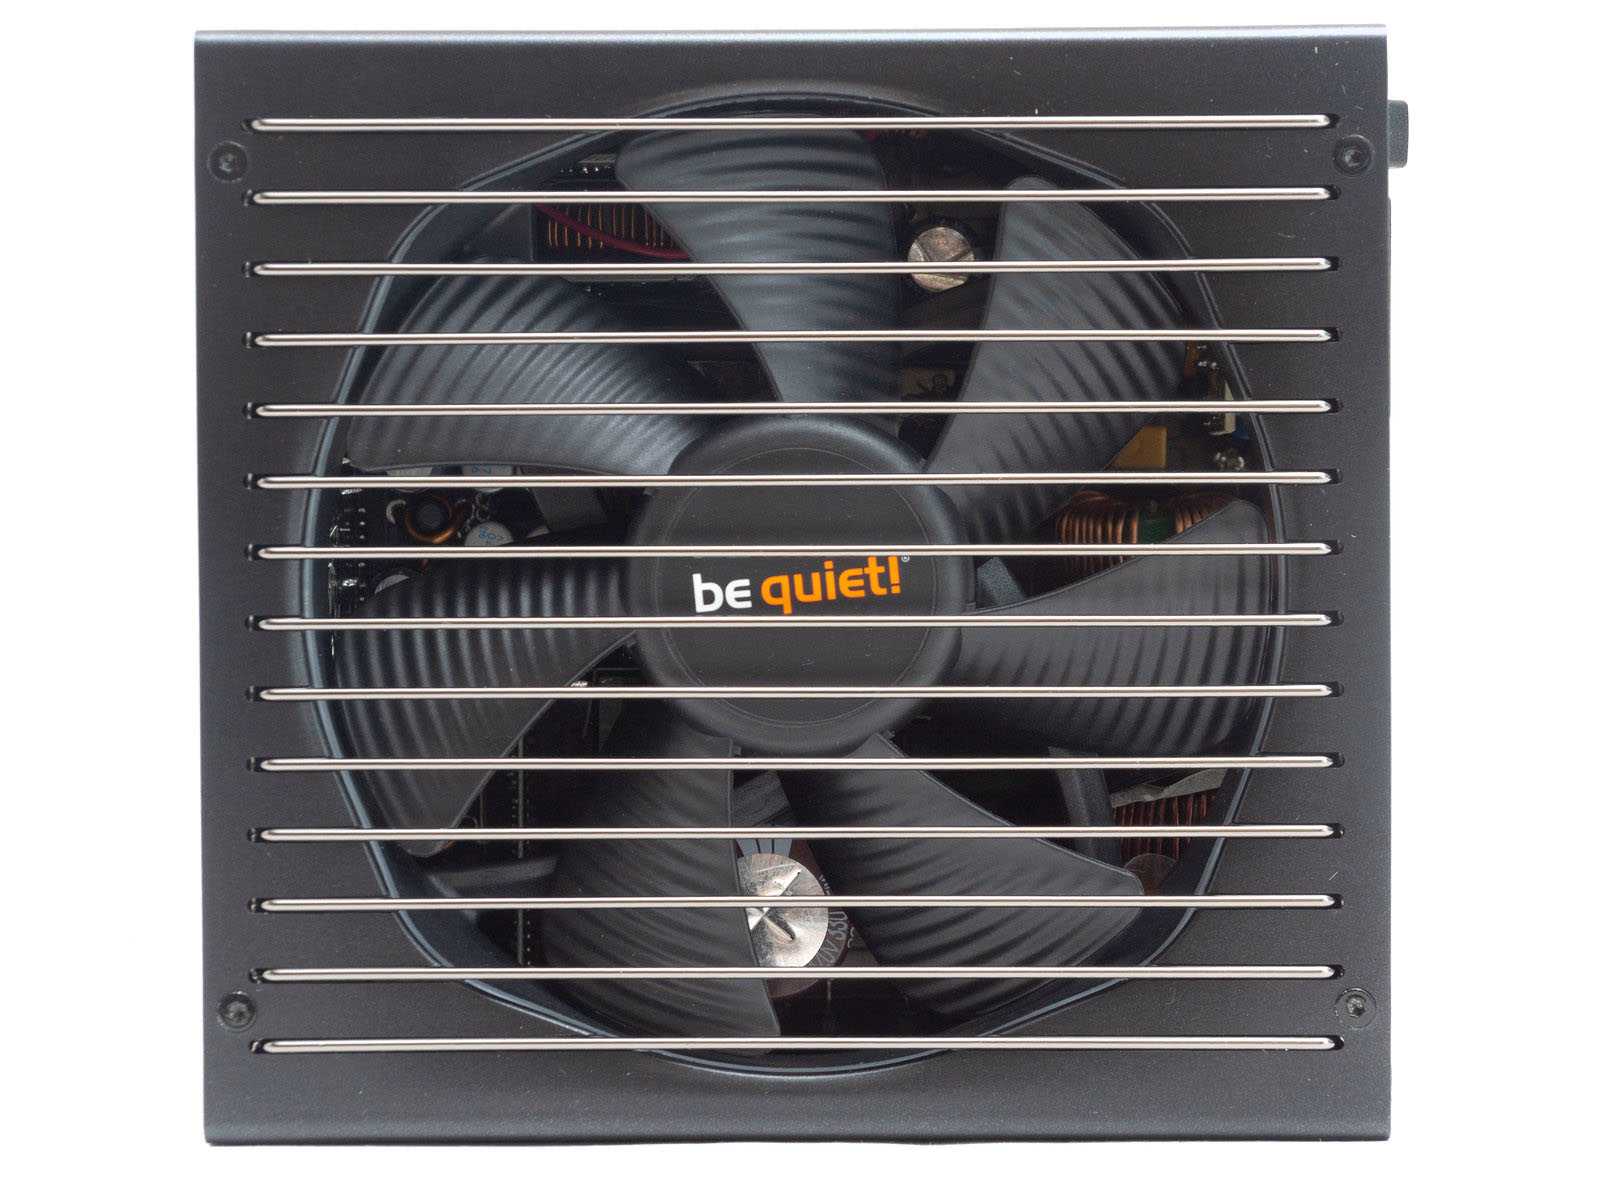 Be quiet straight Power 11 750w. Be quiet! Straight Power 11 Platinum 750w. Be quiet straight Power 11 750w как подключить. Be quiet straight p8/p4.